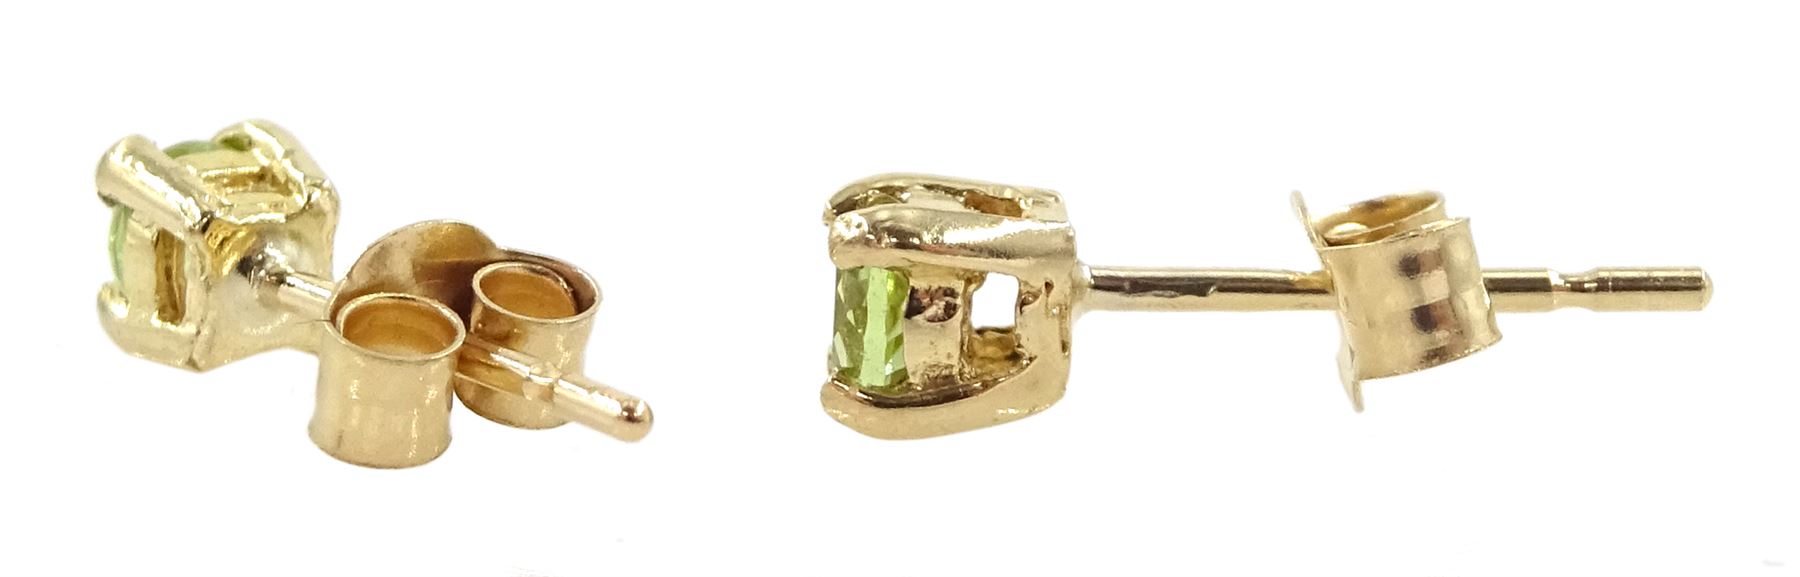 Pair of 9ct gold peridot stud earrings - Image 2 of 2